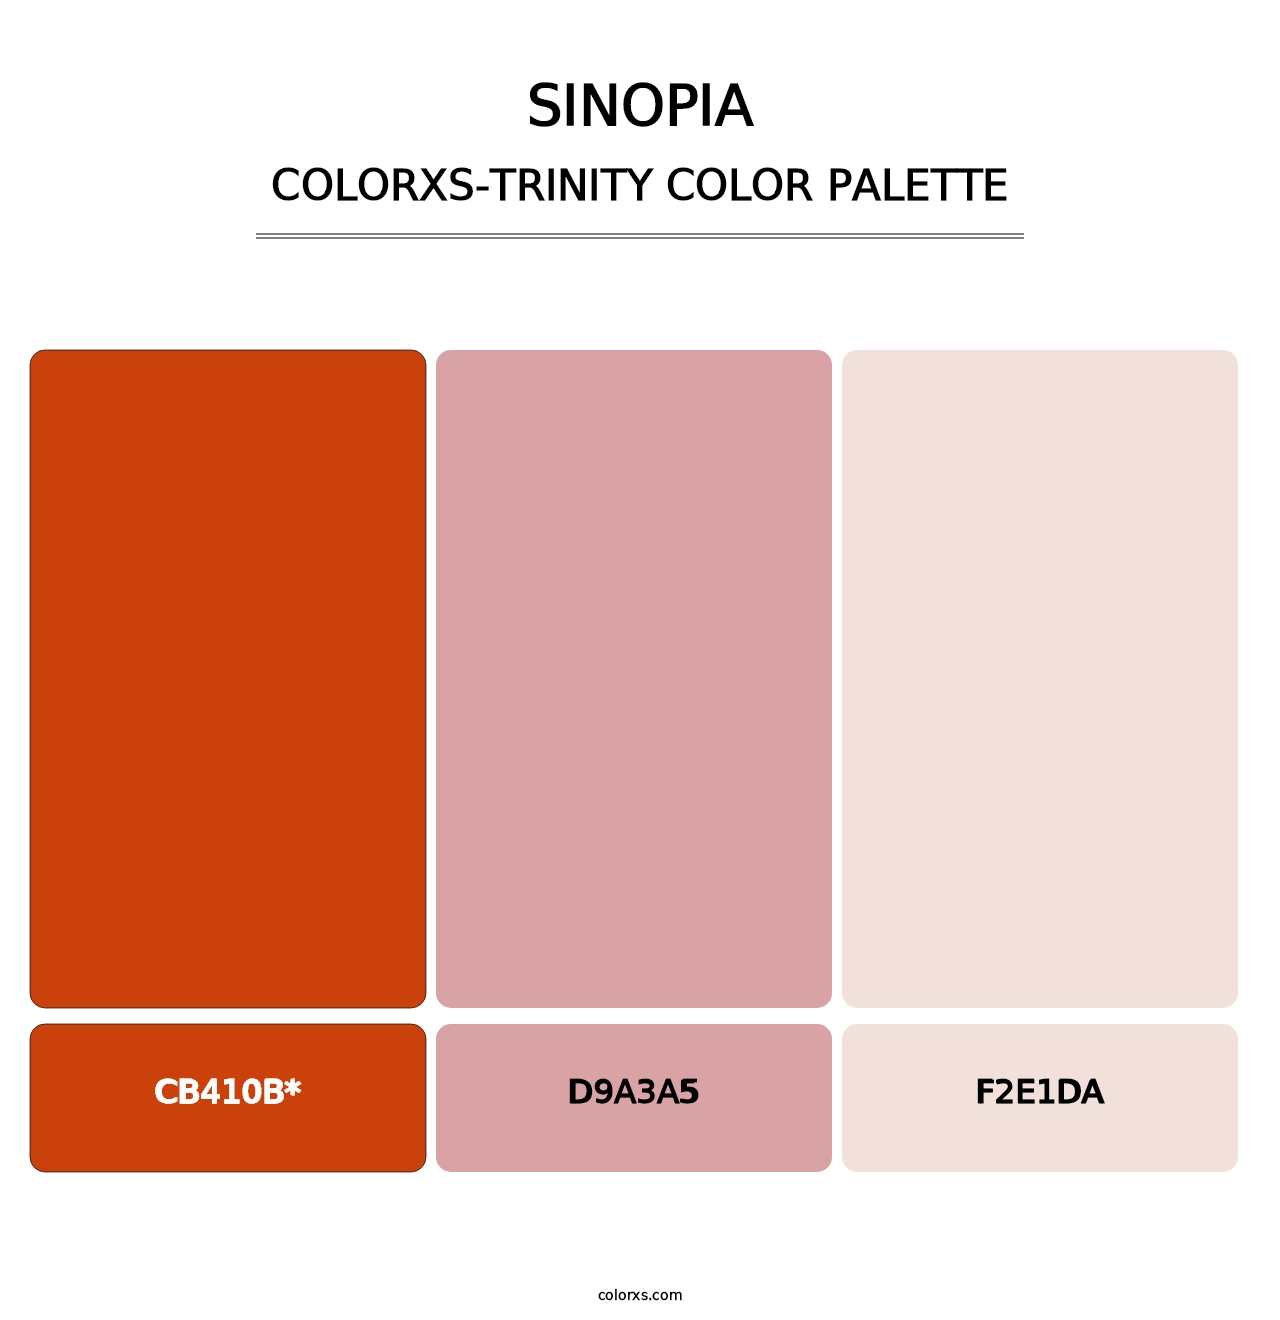 Sinopia - Colorxs Trinity Palette